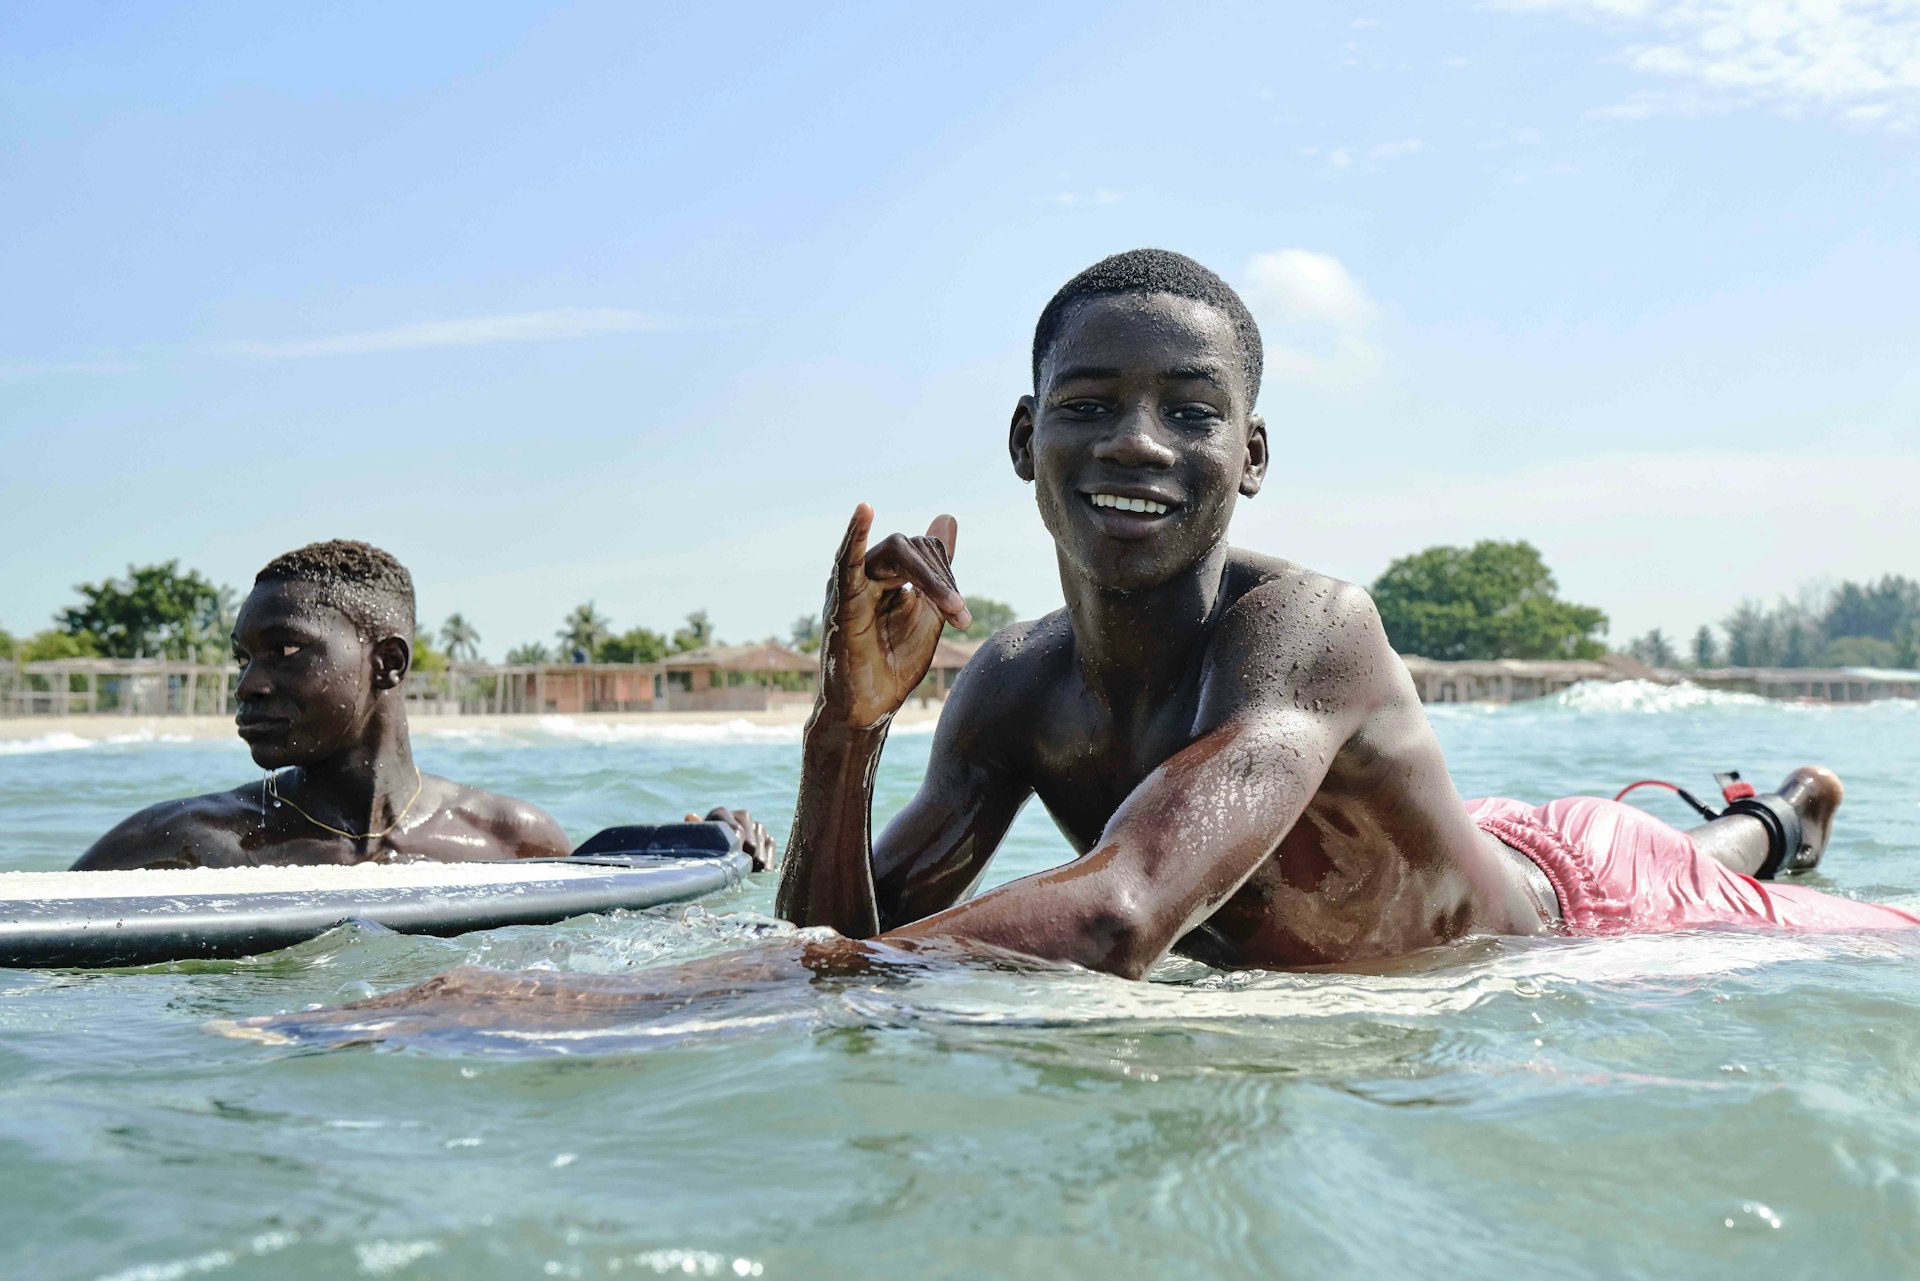 Inside the youthful surf scene of Tarkwa Bay, Lagos